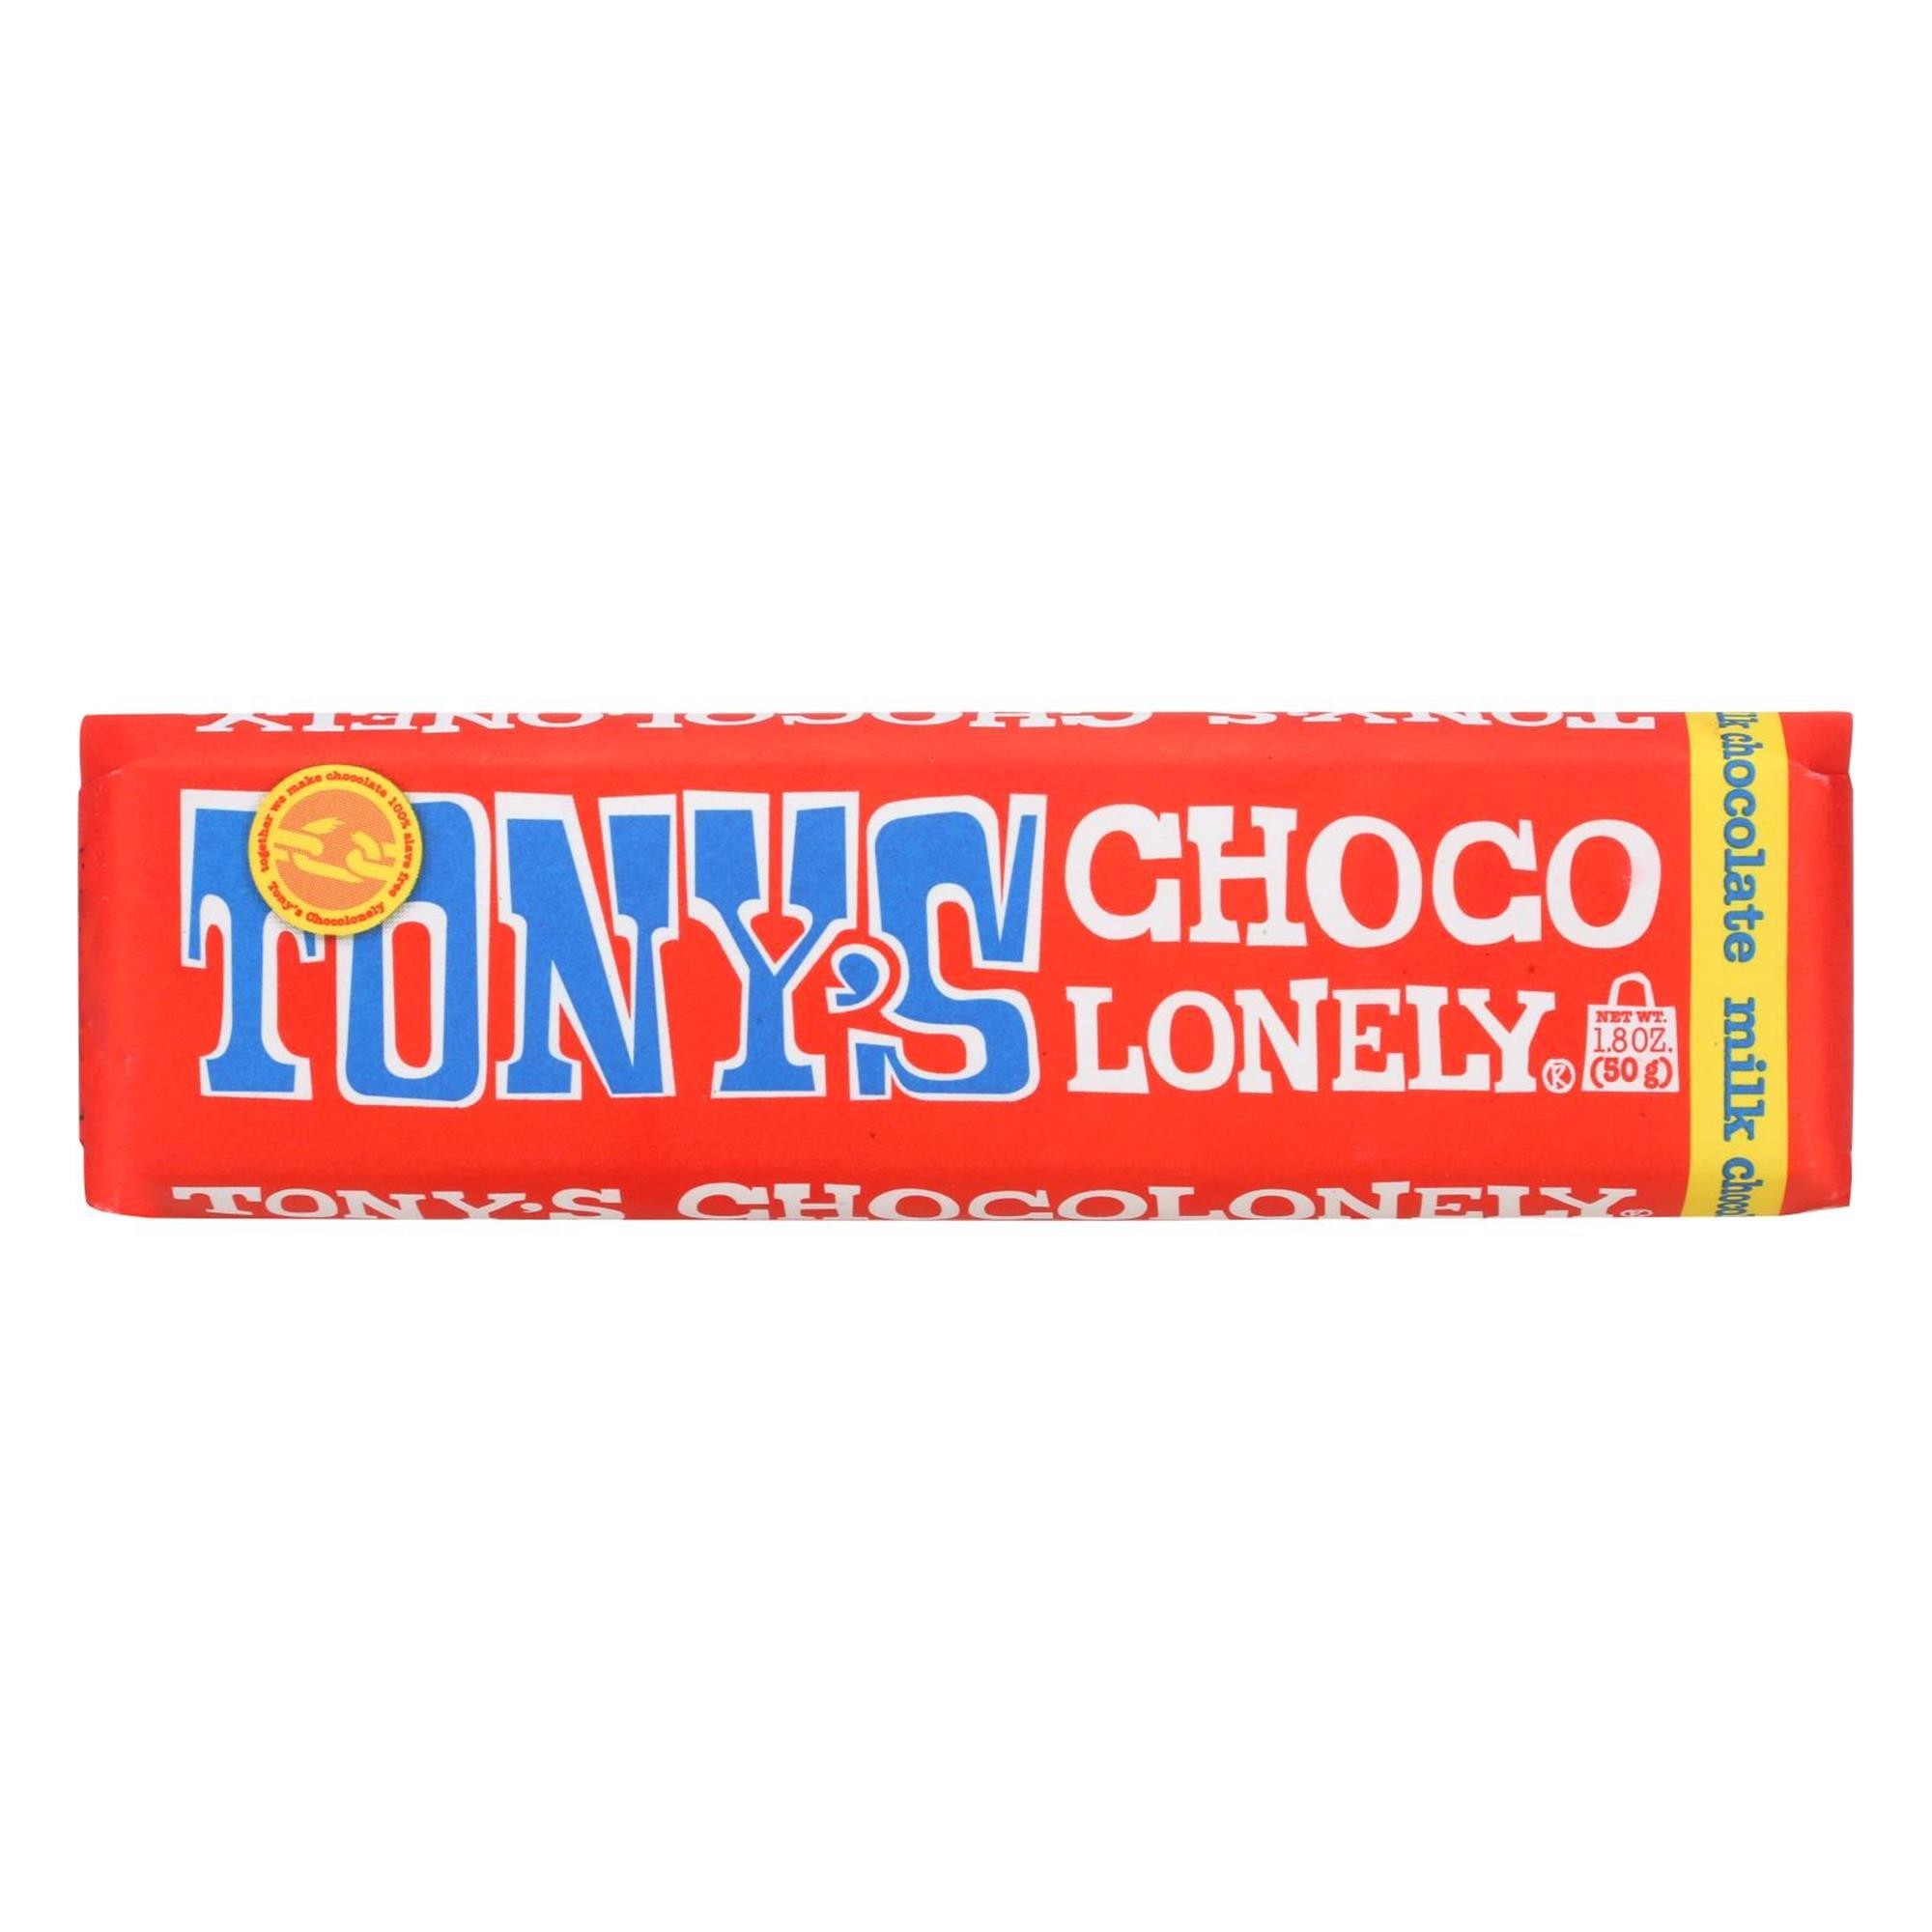 Tony's milk chocolate mini bar